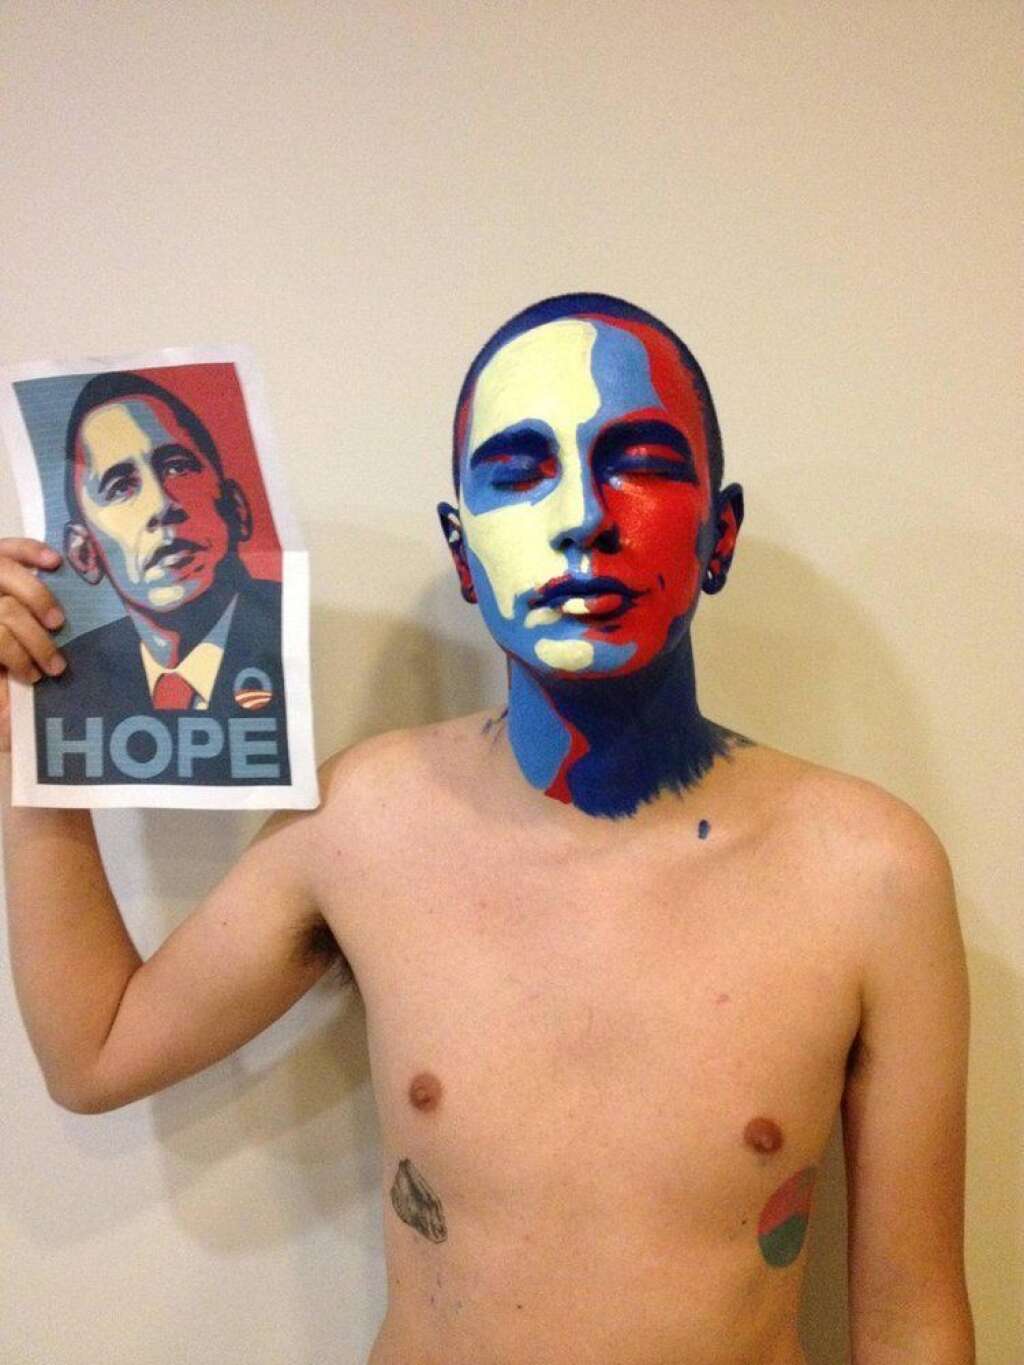 Le poster "Hope" d'Obama - <a href="http://imgur.com/a/rkabm">SOURCE</a>